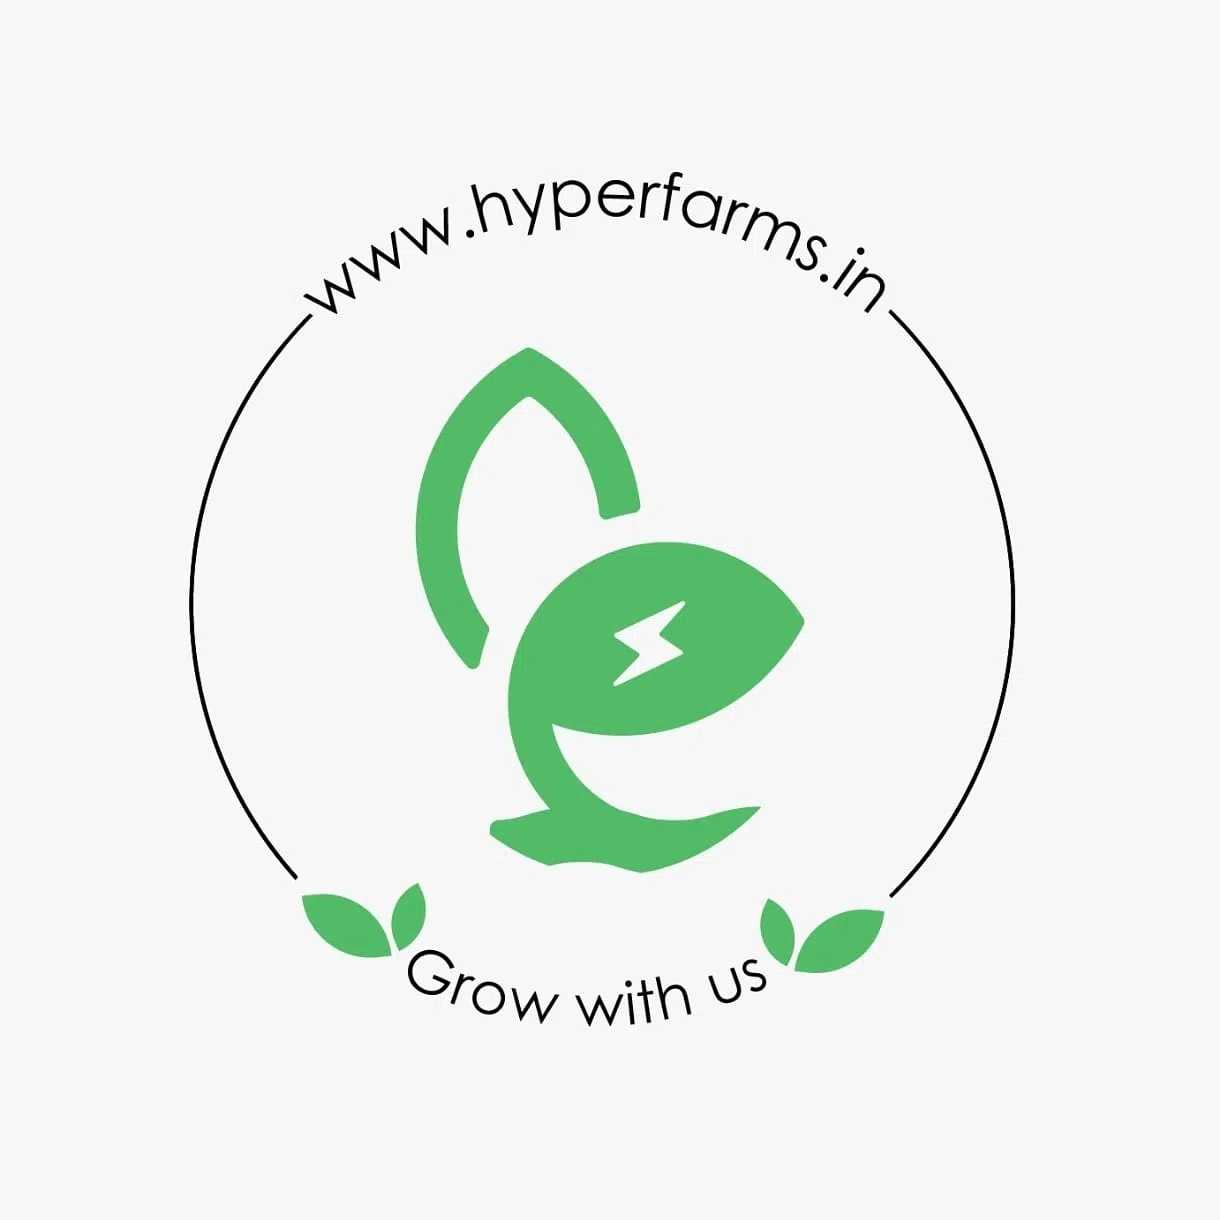 Hyperfarms Private Limited